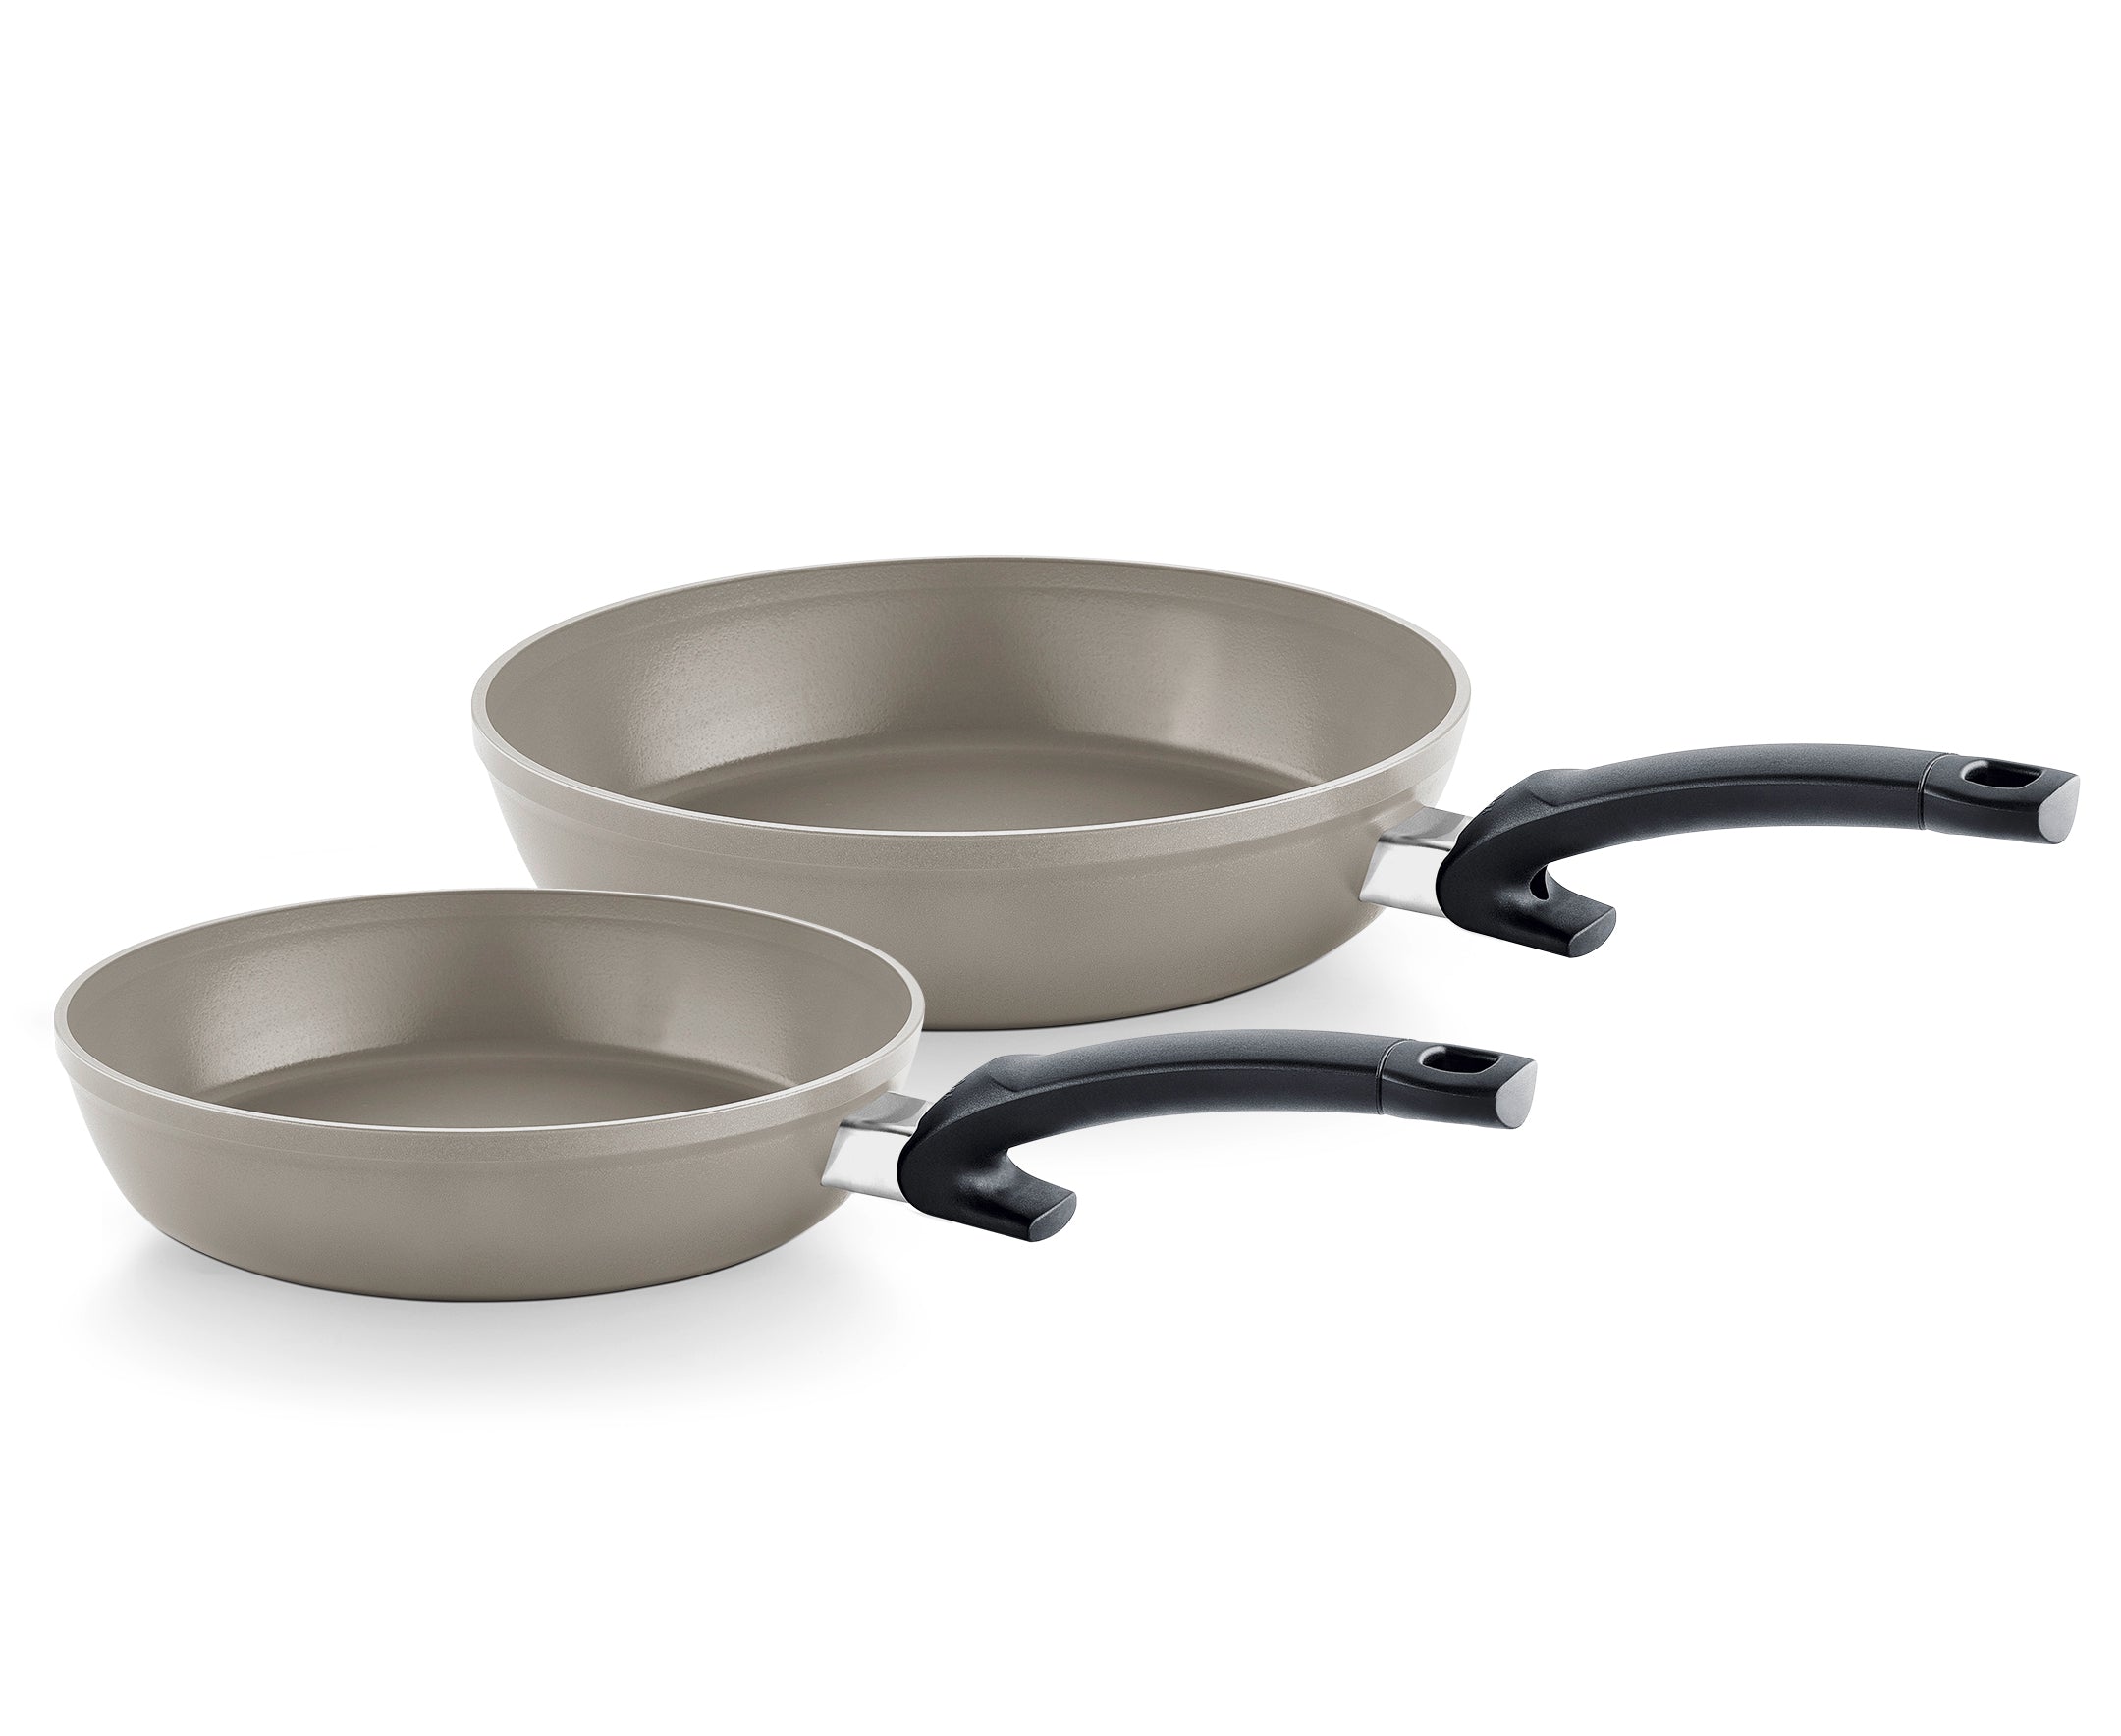 Fissler - Ceratal® Comfort Ceramic Frying Pan, 2 Piece Set - The Healthy Frying Pan™ Set - 9.5" & 11"